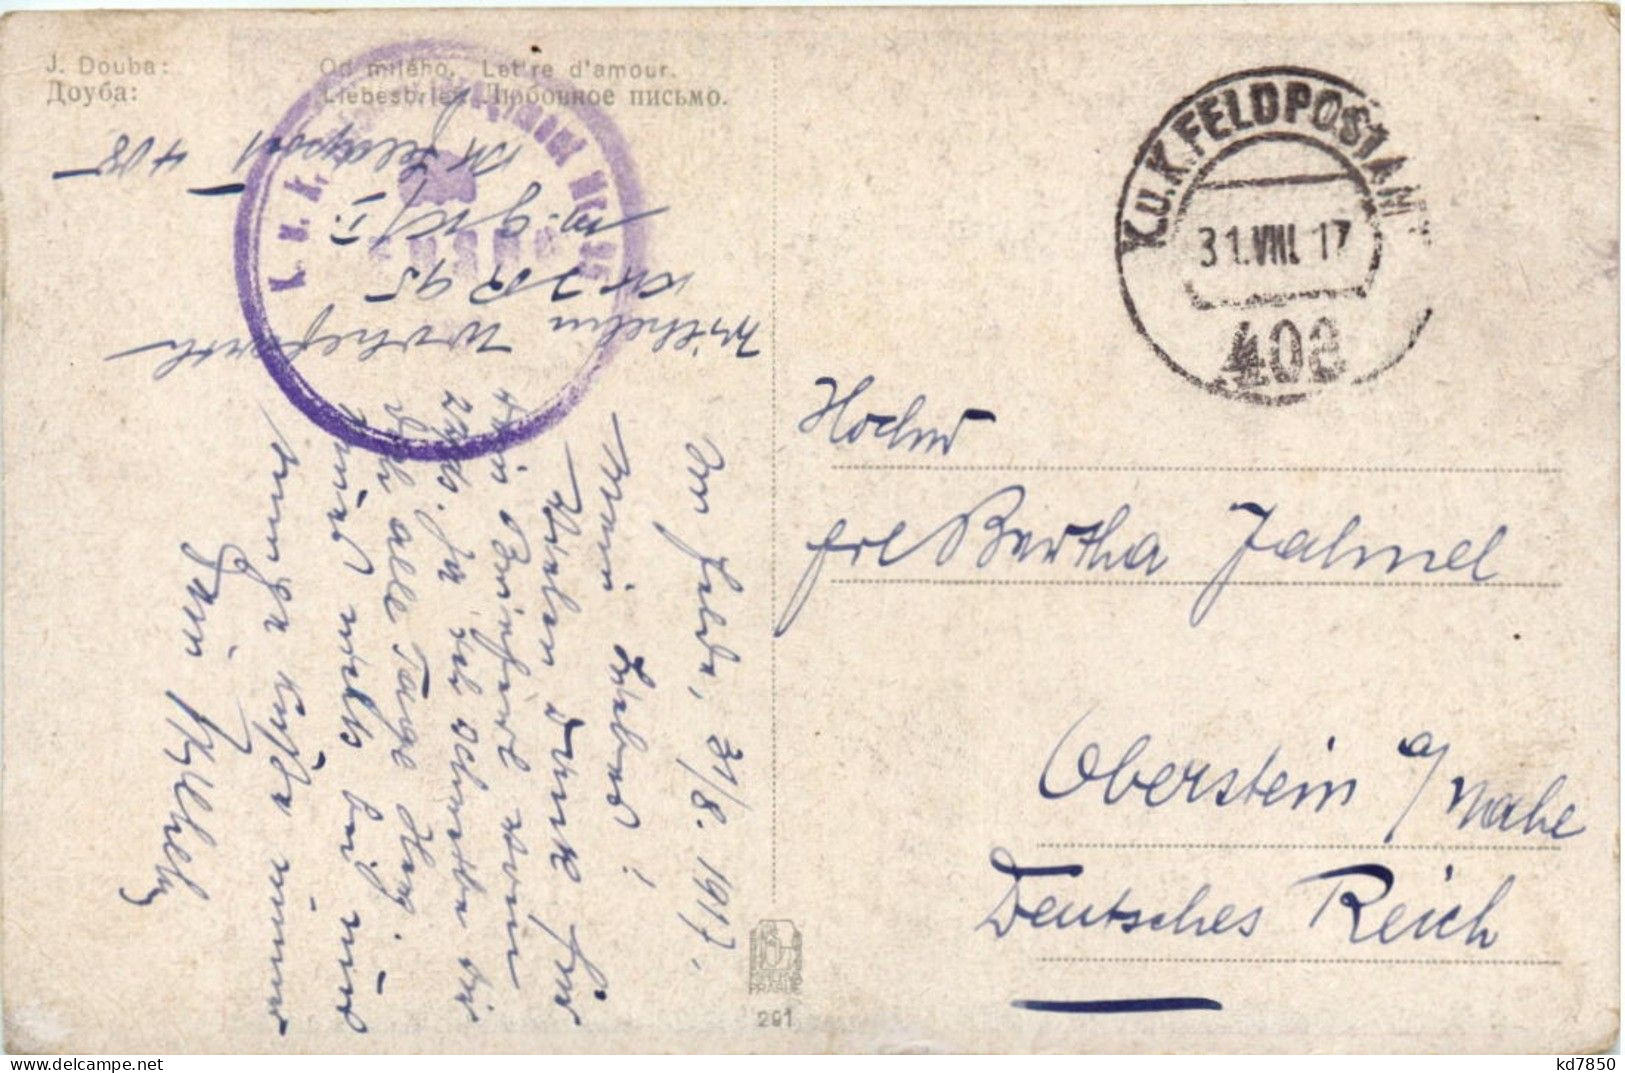 J. Douba - Postbote - Feldpost - Postal Services